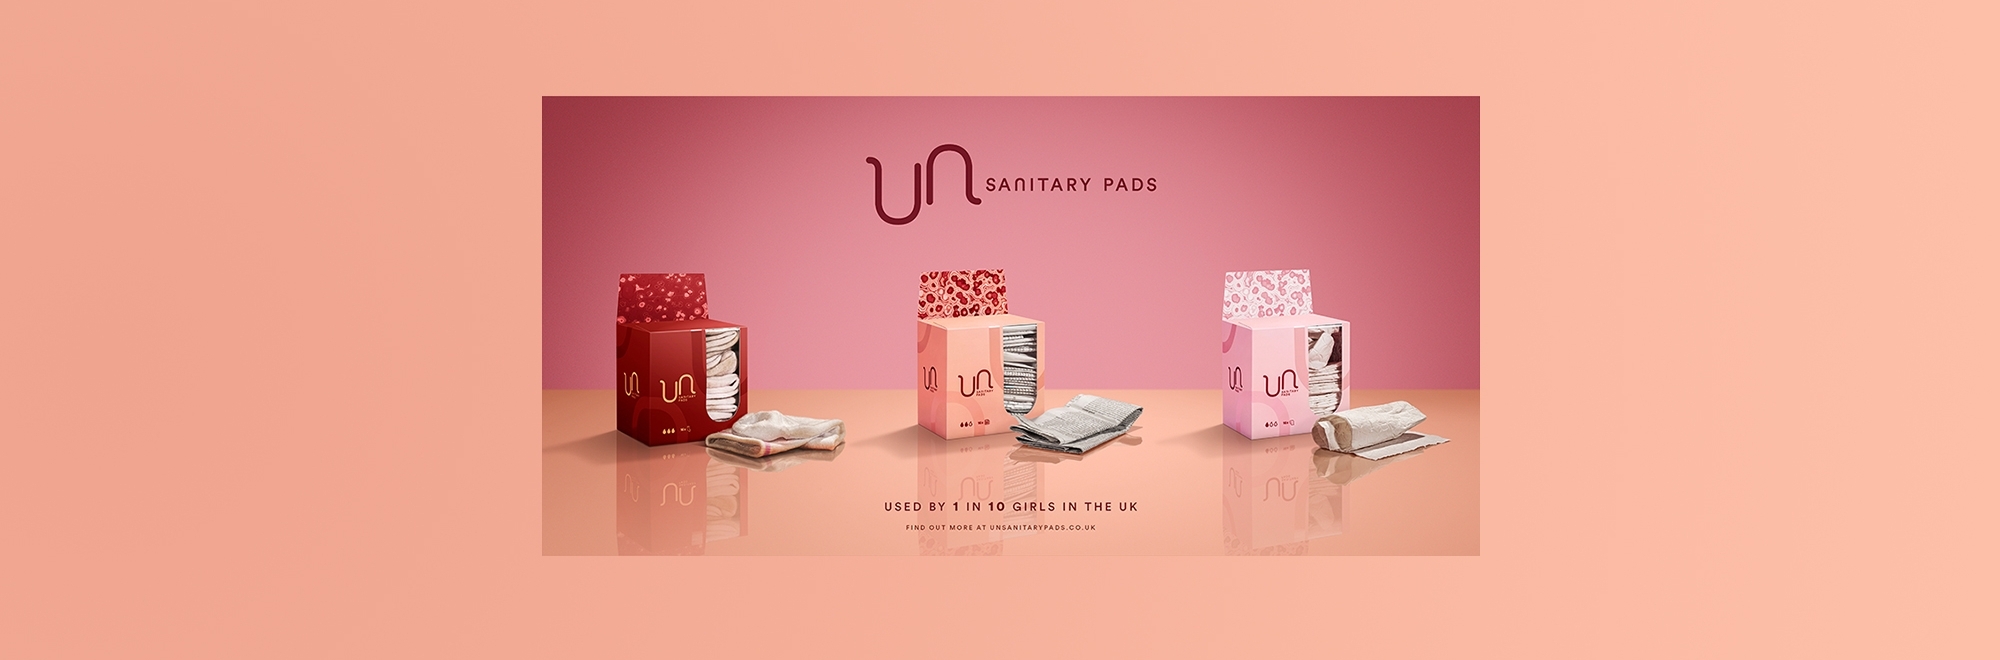 adam&eveDDB launches ‘UNsanitary’ product range to raise period poverty awareness